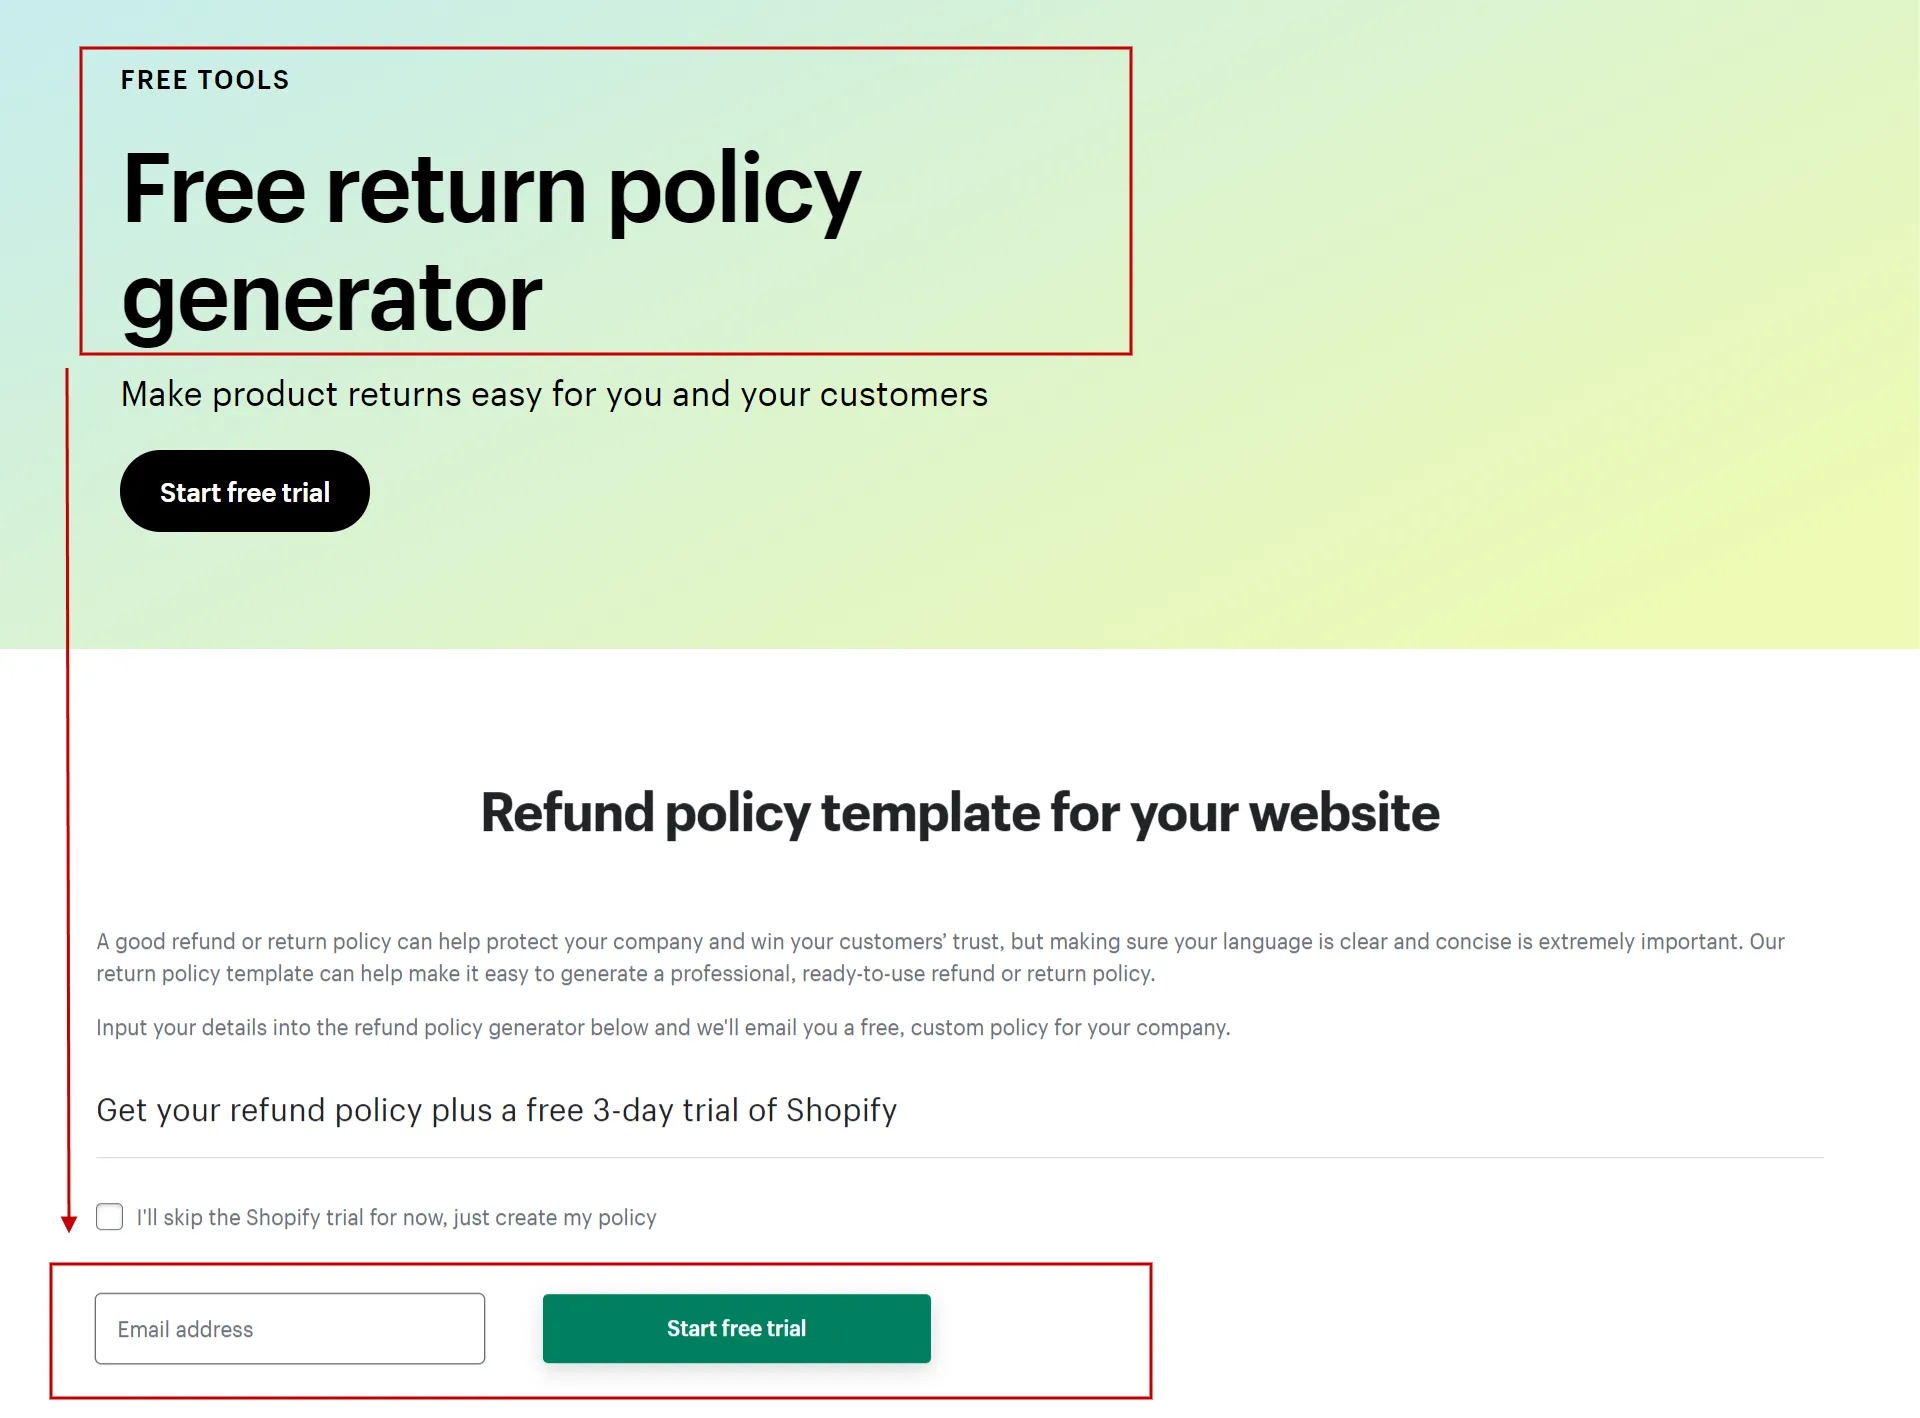 Visit refund policy generator Shopify